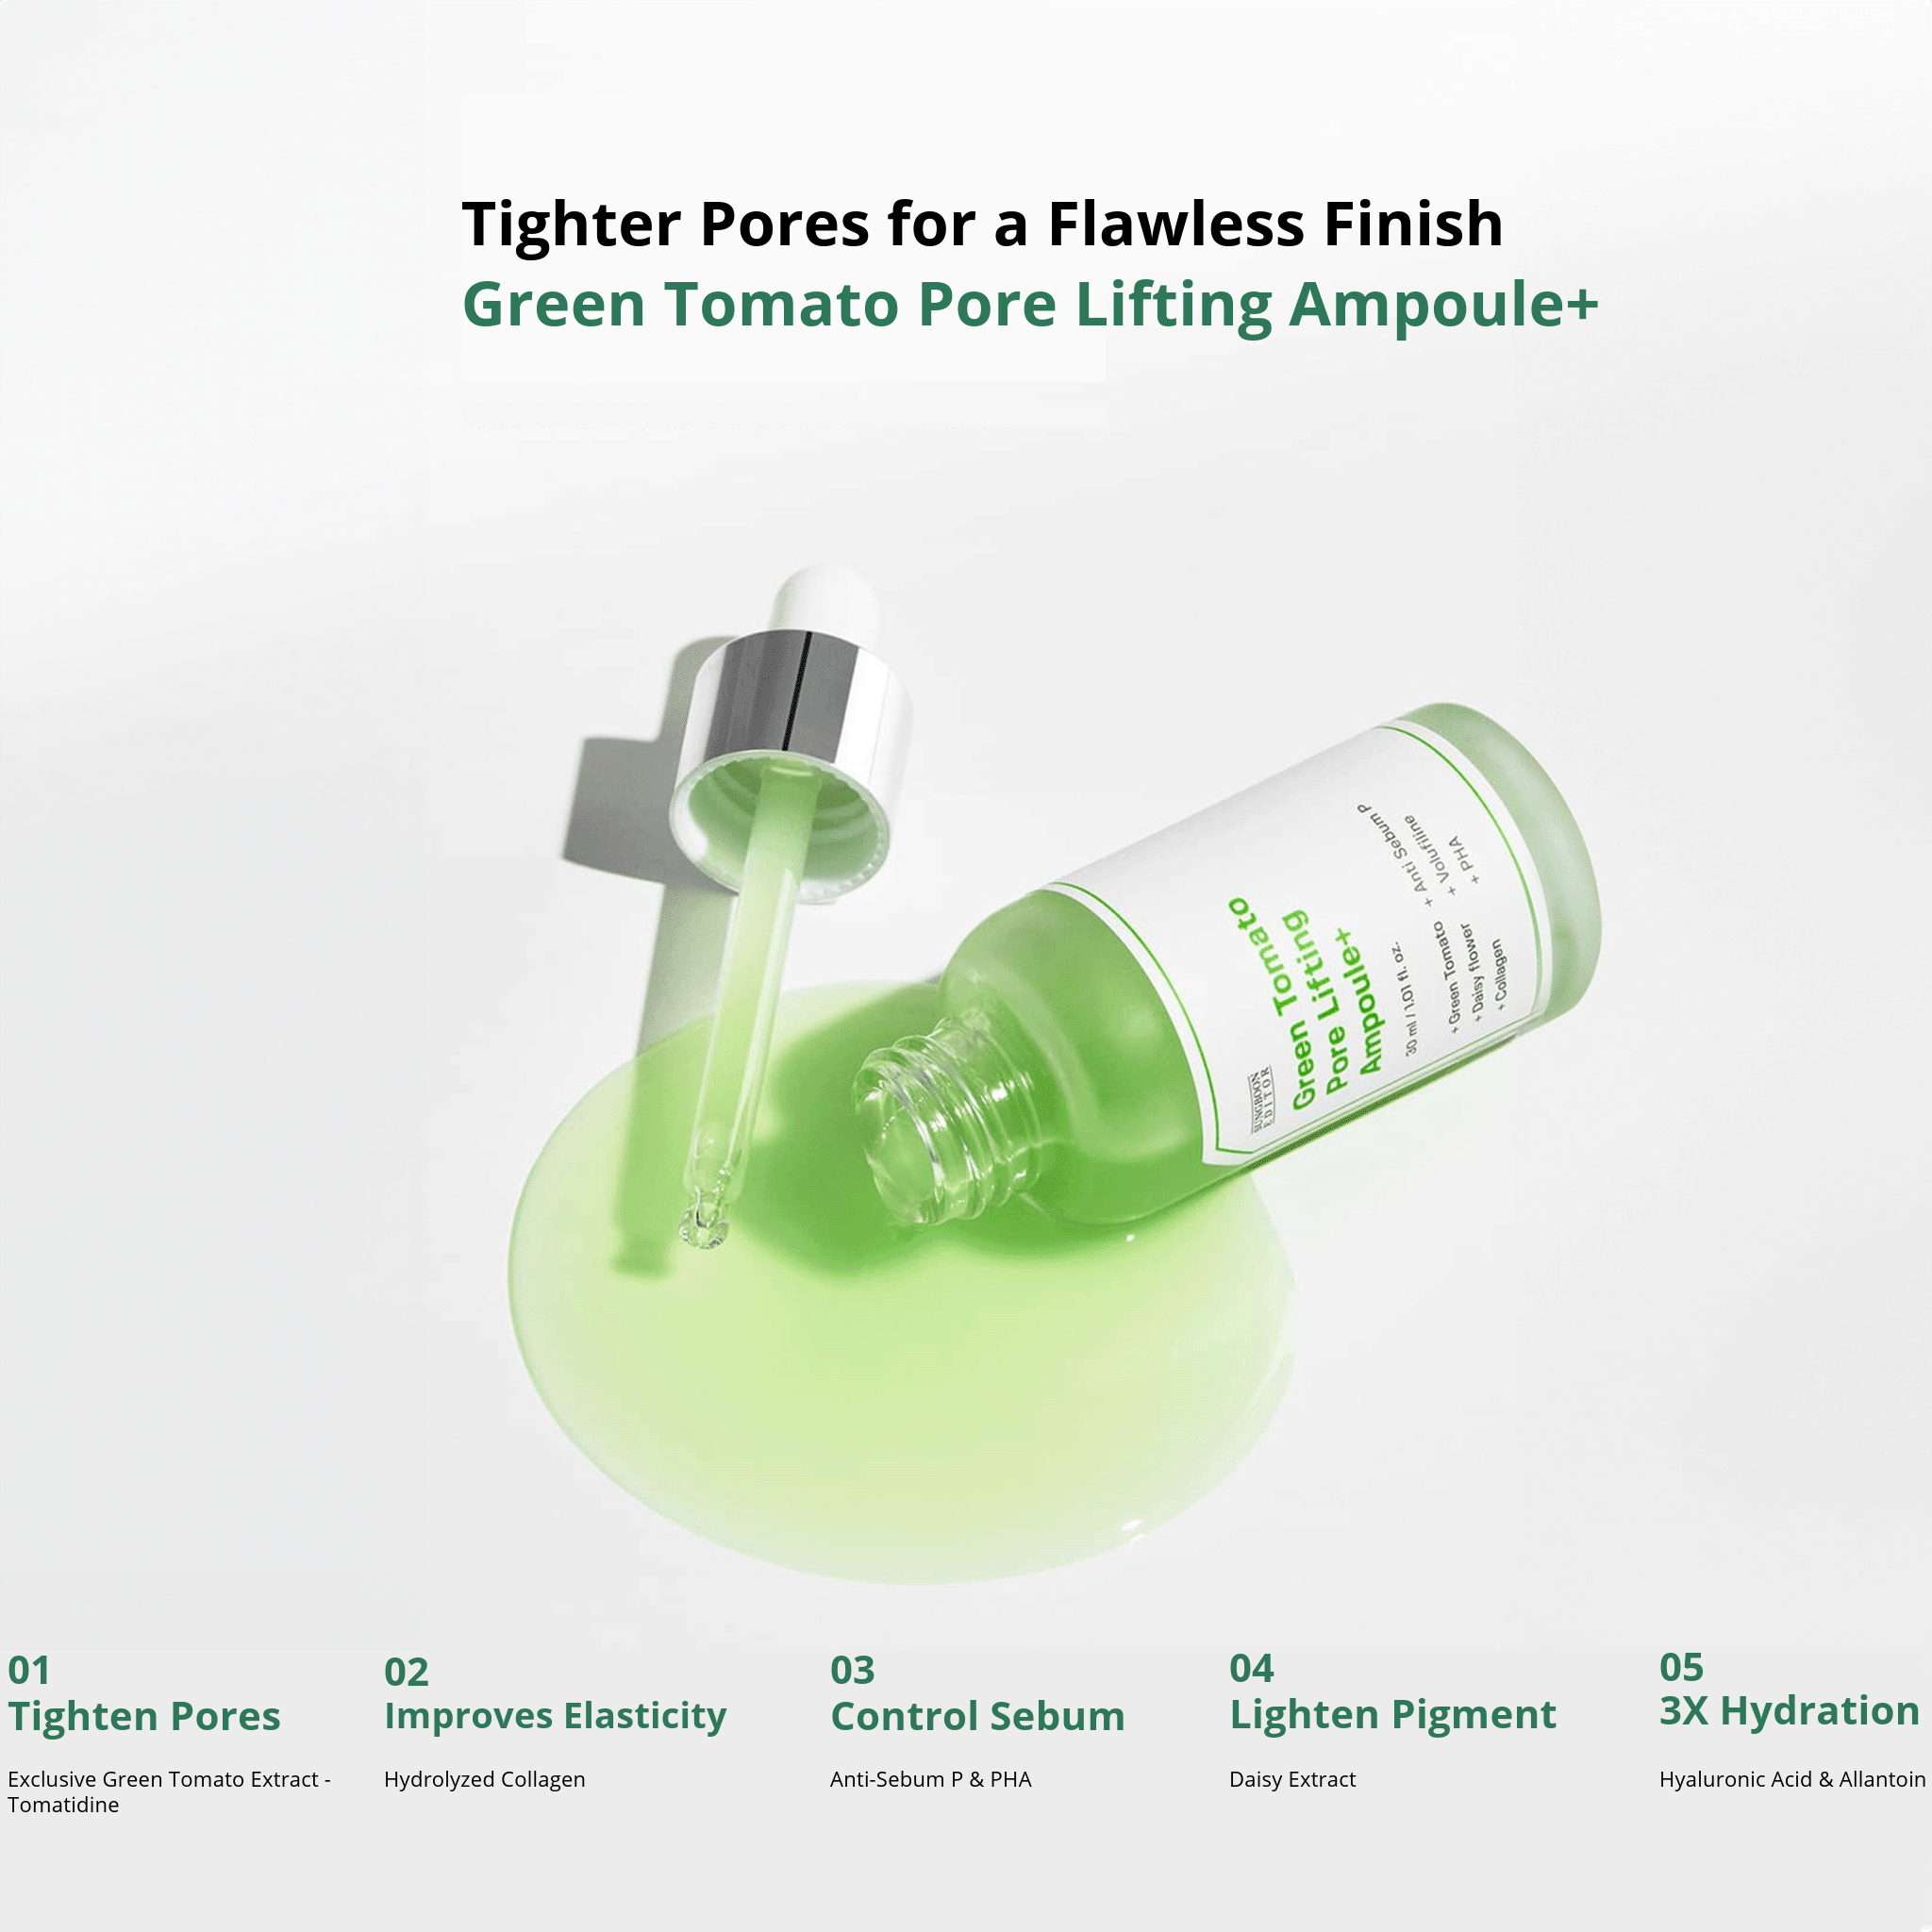 SUNGBOON EDITOR Green Tomato Pore Lifting Ampoule+